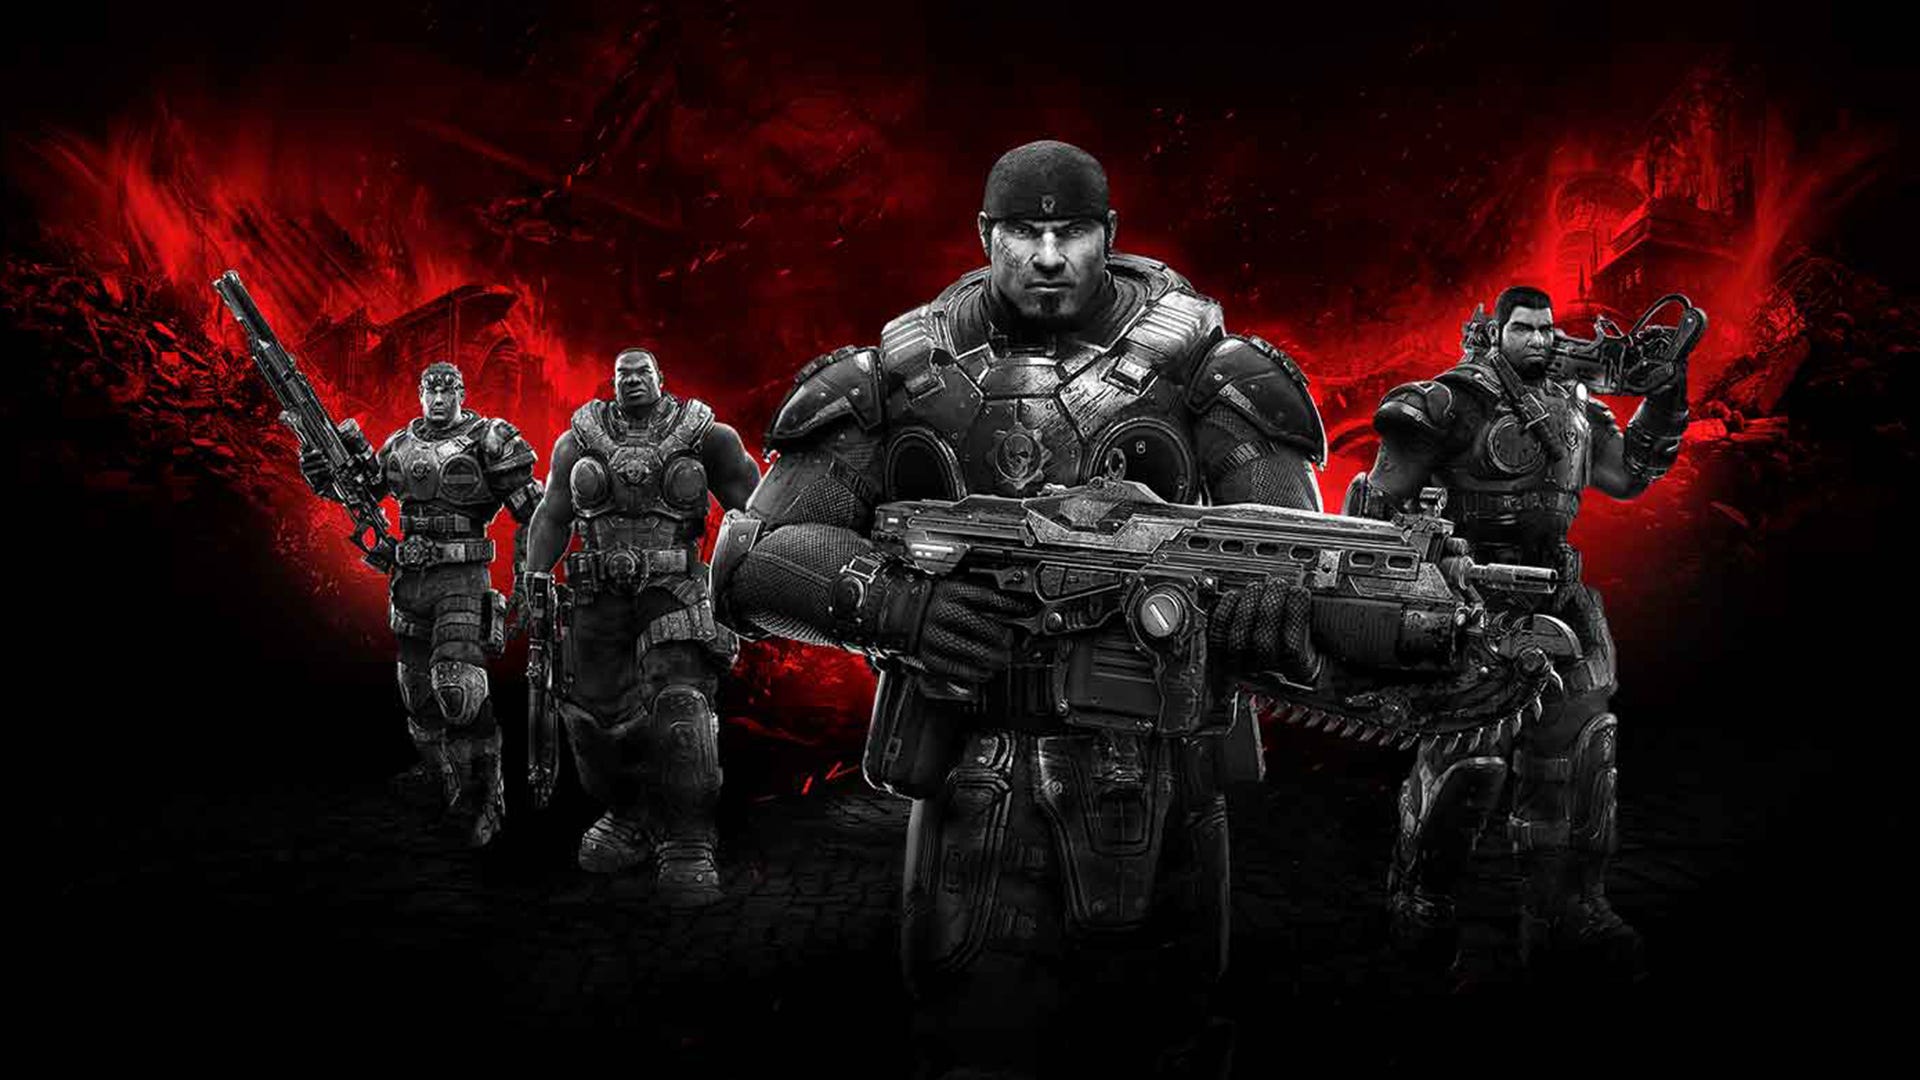 Gears of War 2 Hands-On Impressions - GameSpot